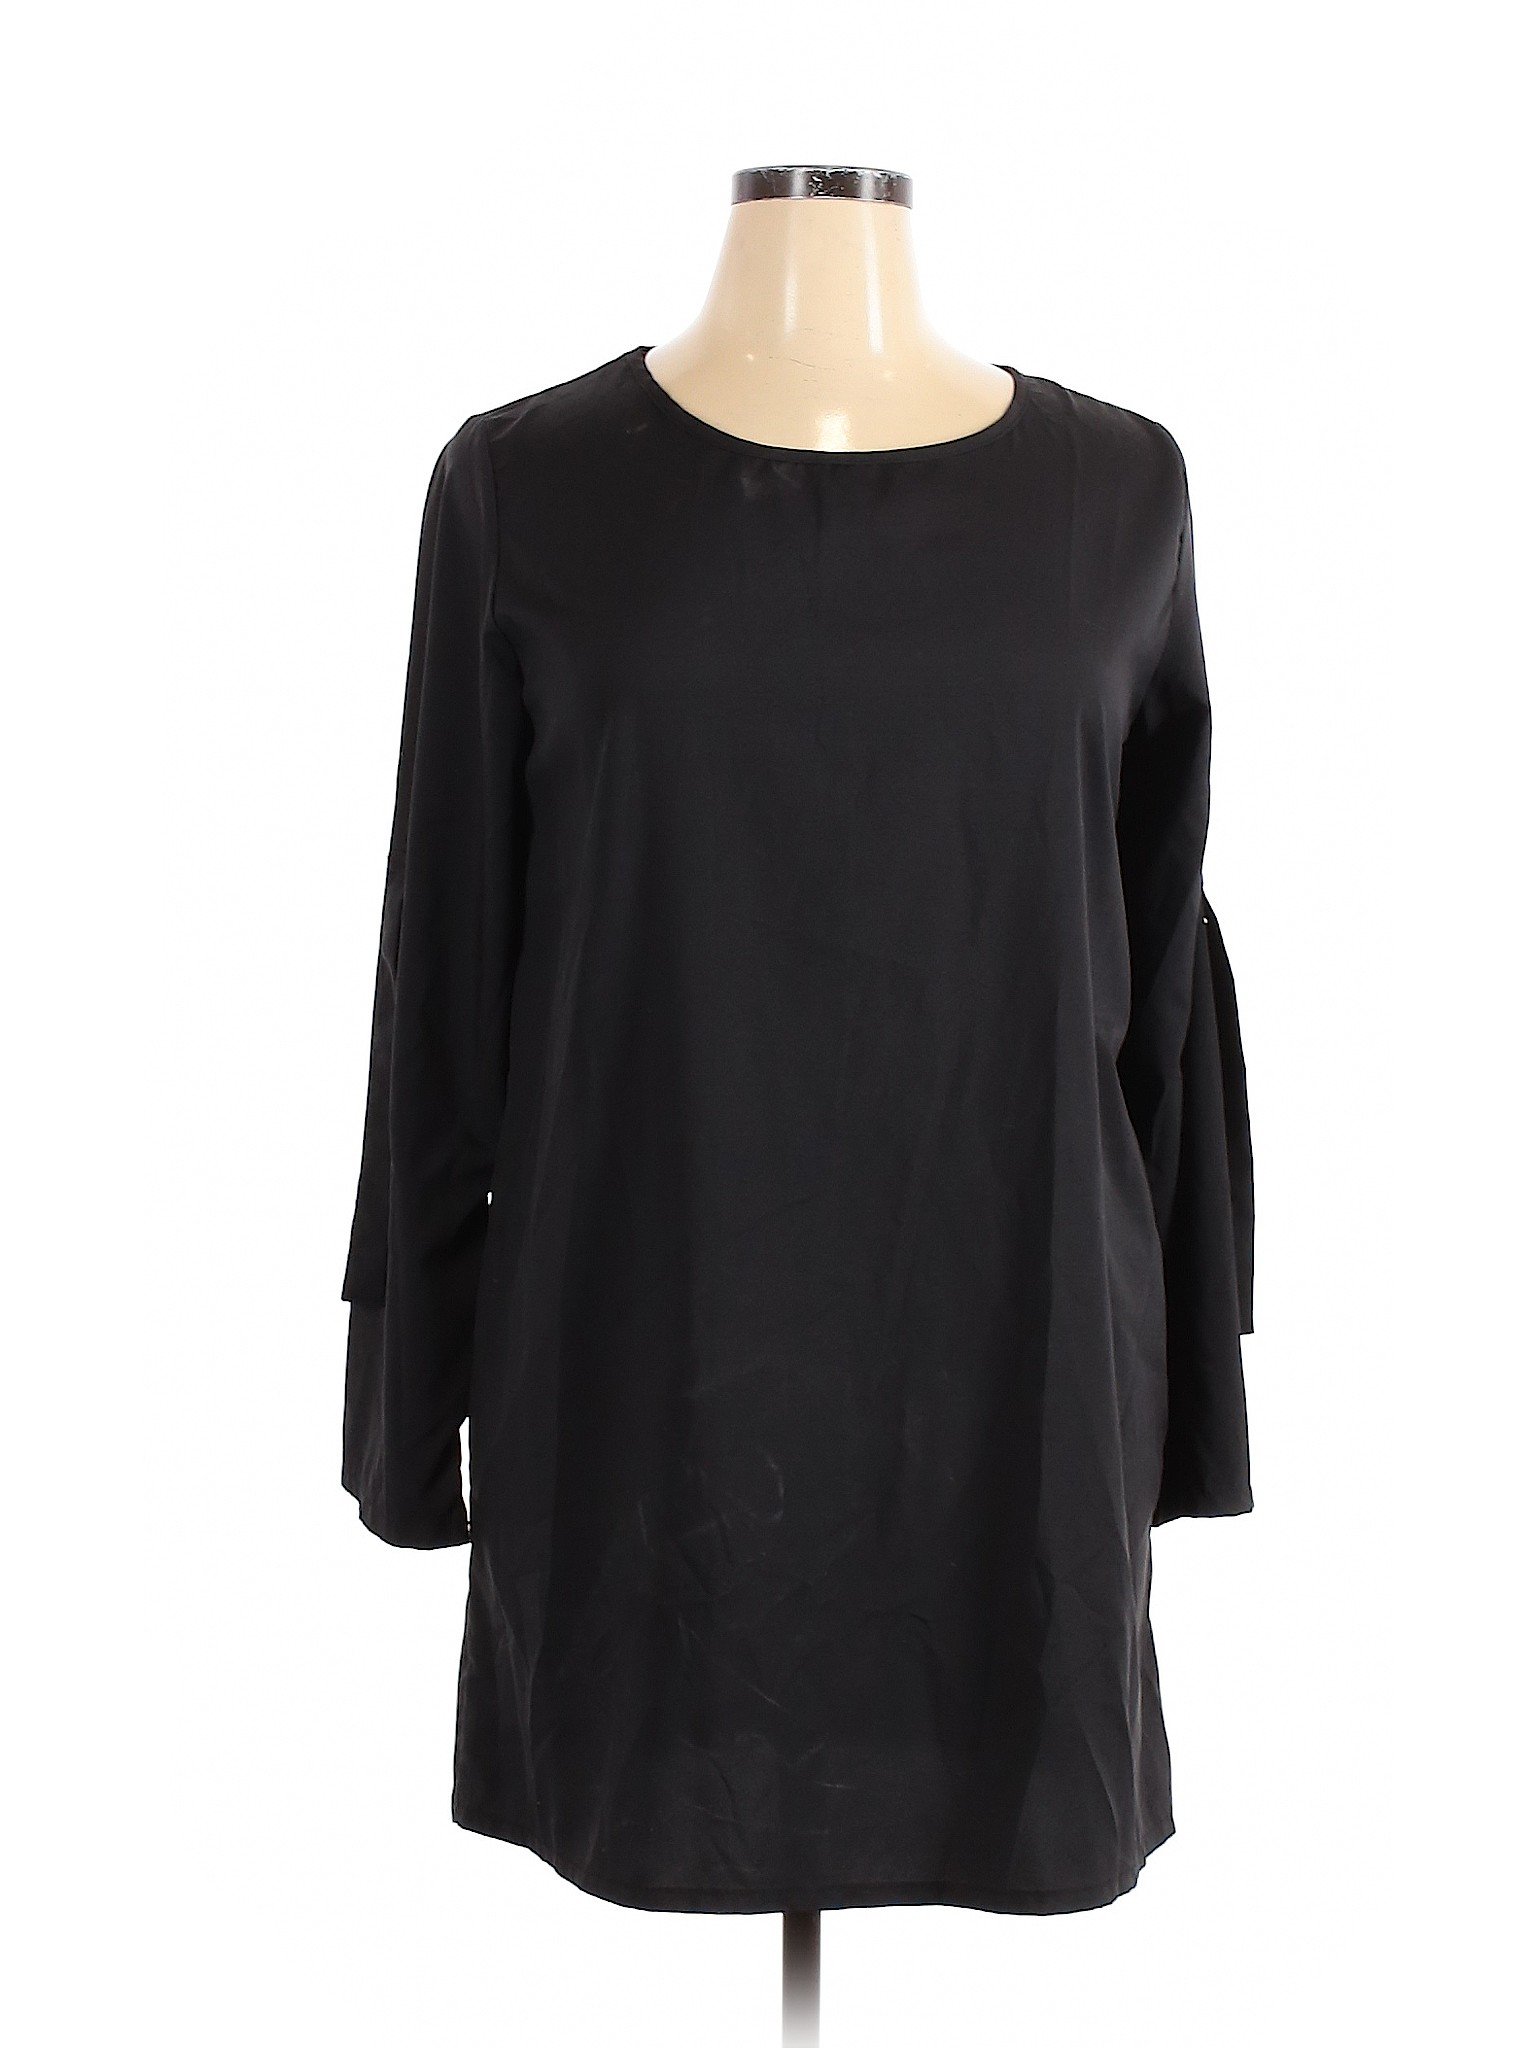 Zanzea Collection Women Black Casual Dress XL | eBay